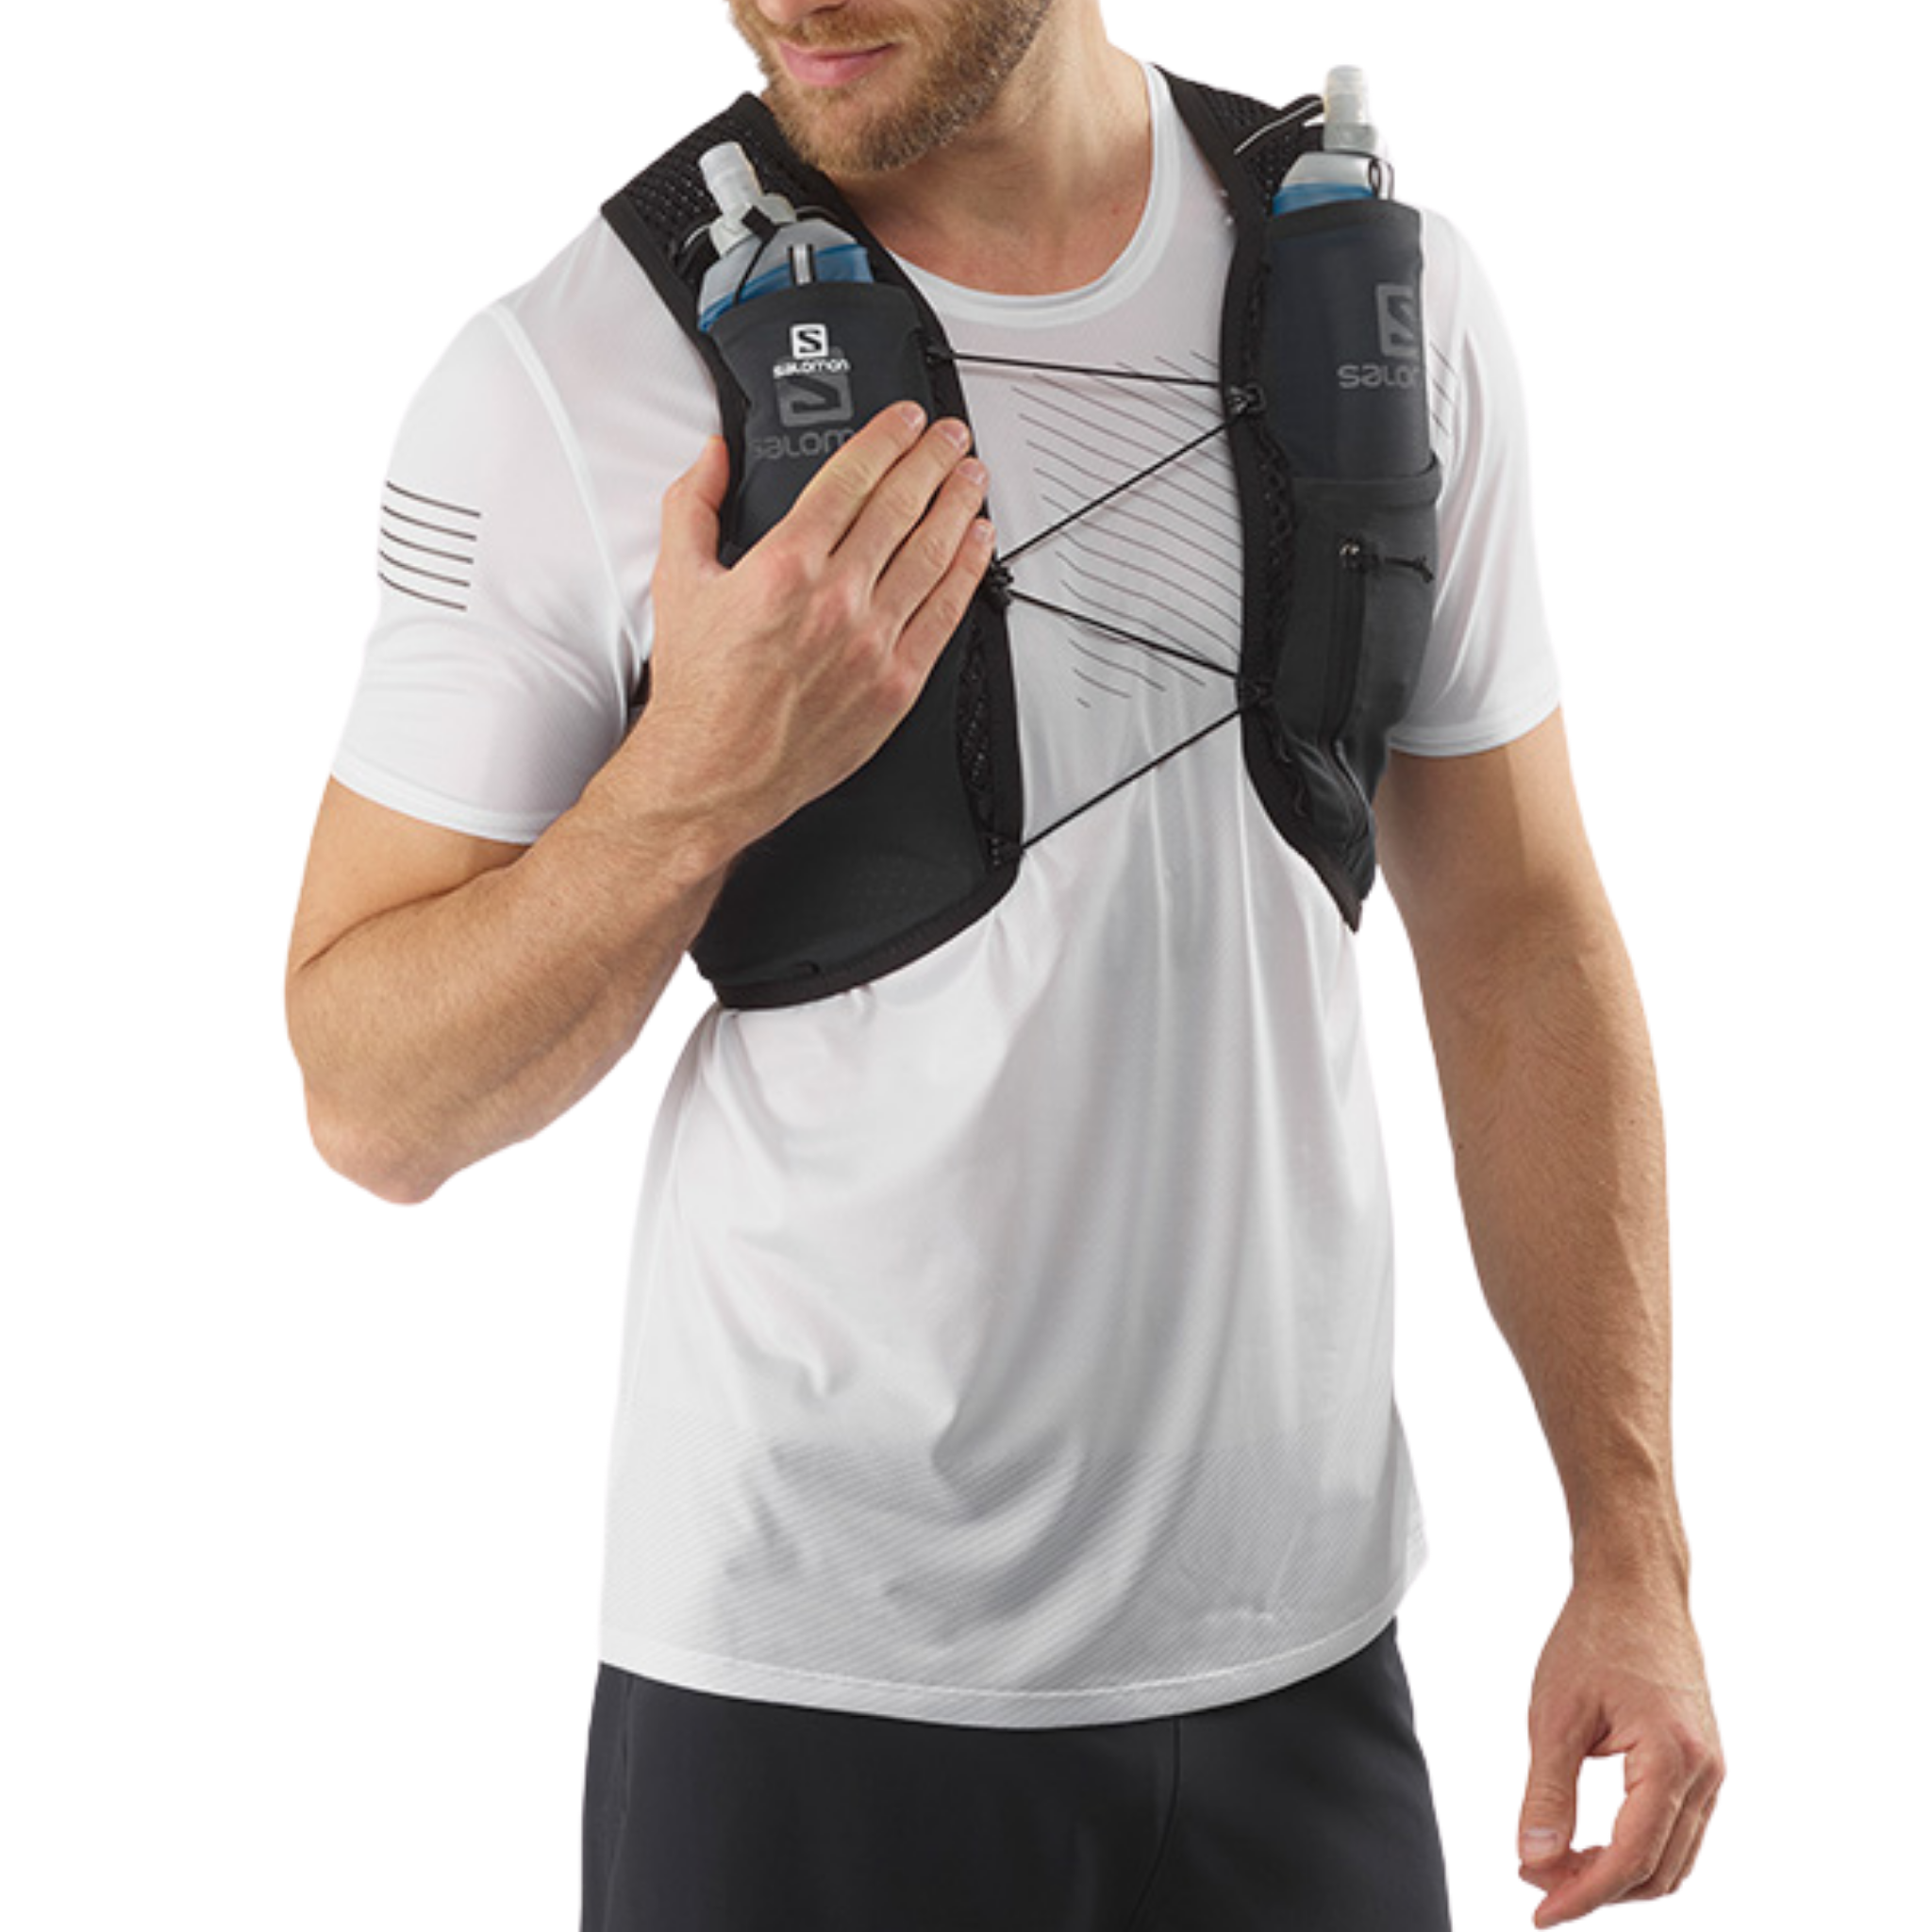 Salomon Active Skin 4 Set - Running vest, Free EU Delivery